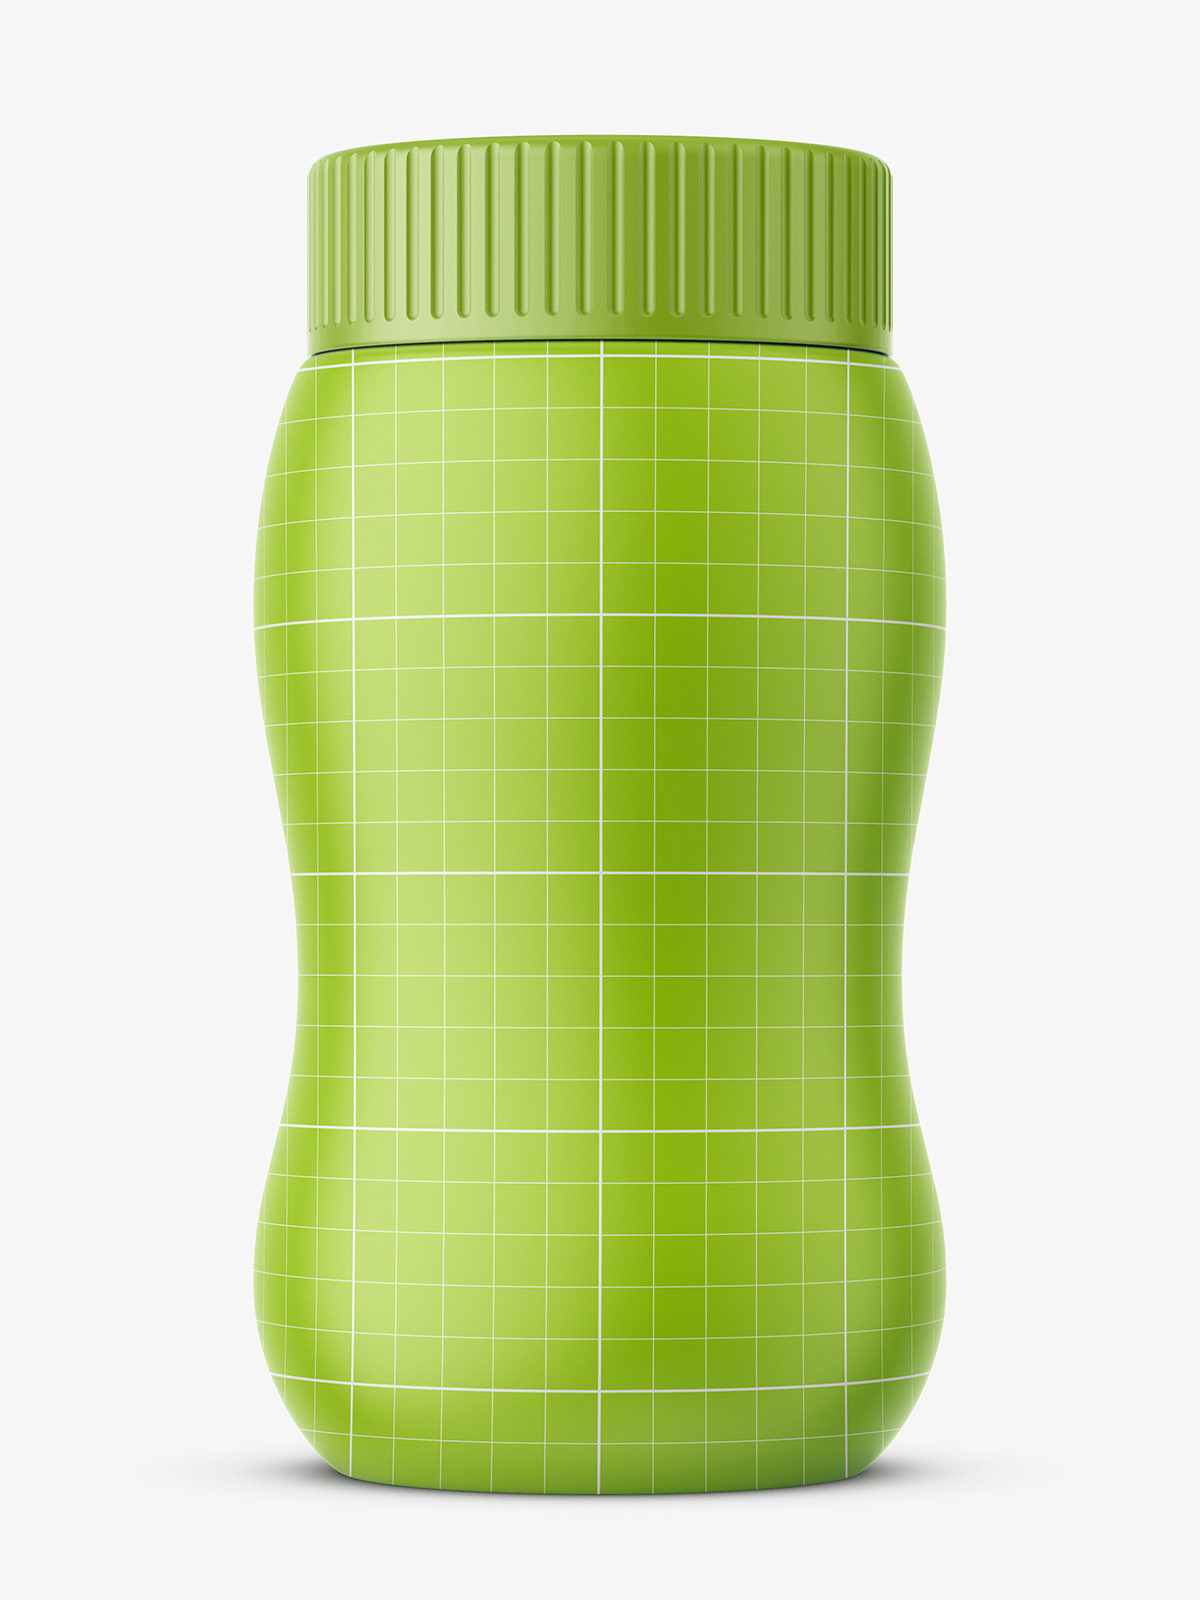 Download Universal Plastic Jar Mockup Smarty Mockups